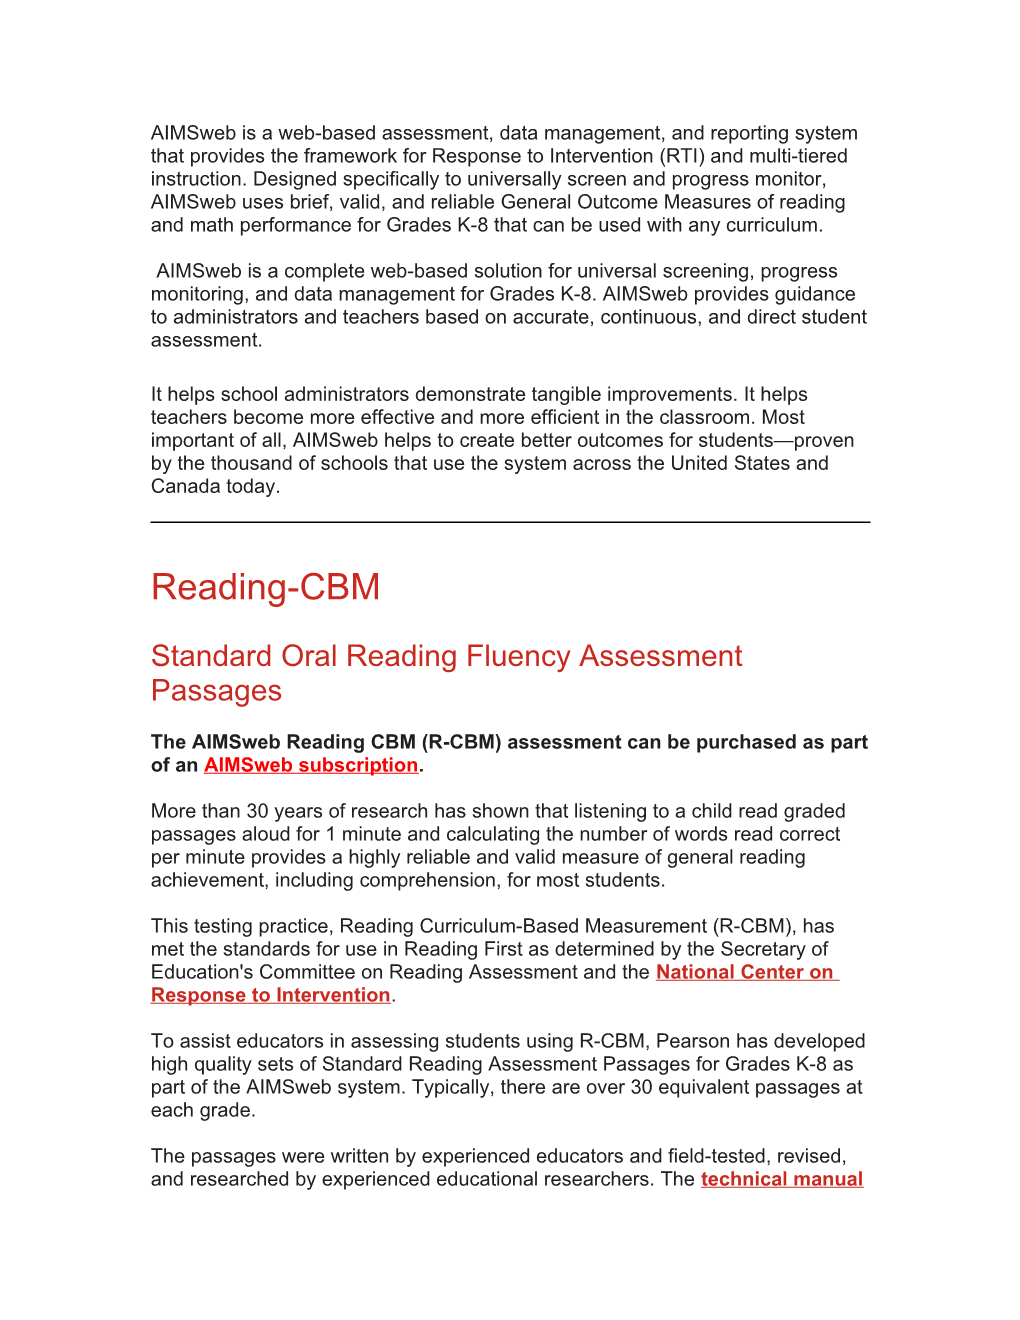 Standard Oral Reading Fluency Assessment Passages